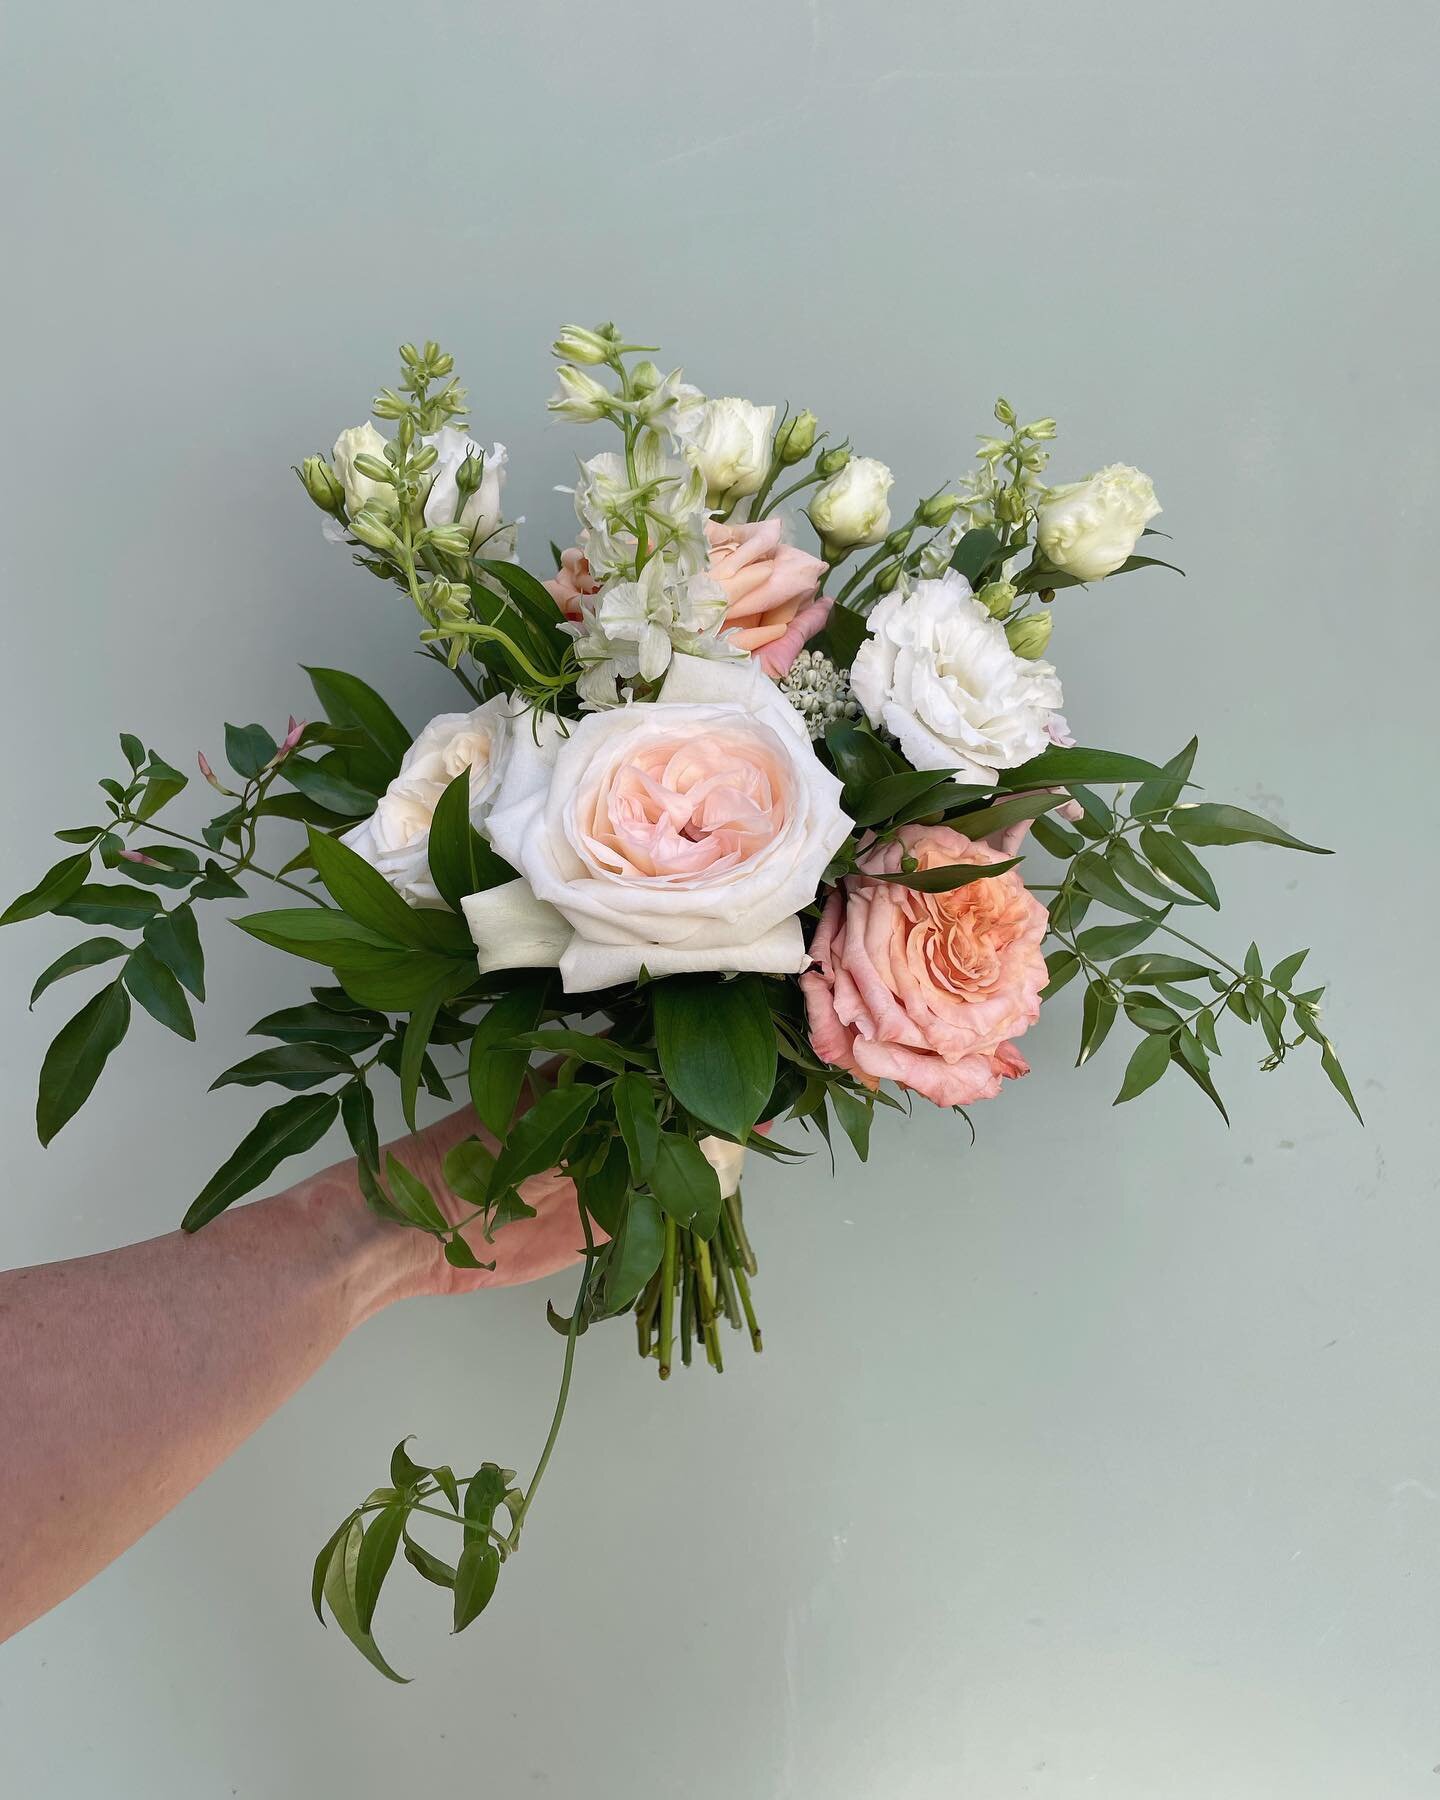 Jasmine vine and soft shades of peach and pink 💗🧡💗
&bull;
&bull;
#banffflowers #banffflorists
#banffflorist #banffwedding #bride #bridesmaids #blushpink #florist #bouquet #flowerbouquet #neutrals #flowers #weddingflowers #weddingflorist #flowerins